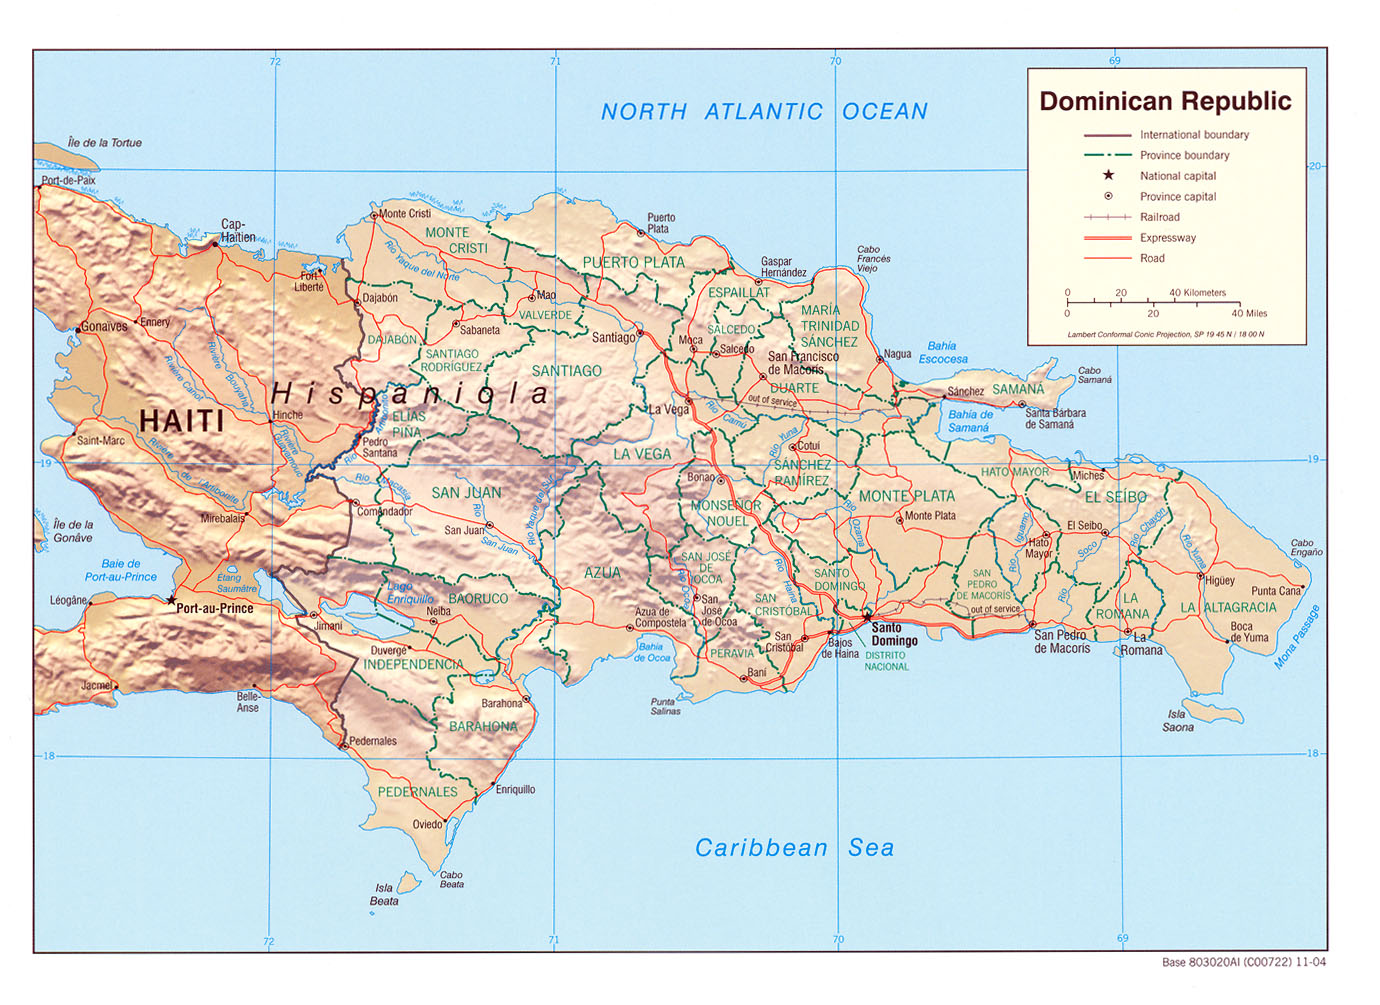 Dominikanische Republik | Landkarten kostenlos – Cliparts kostenlos